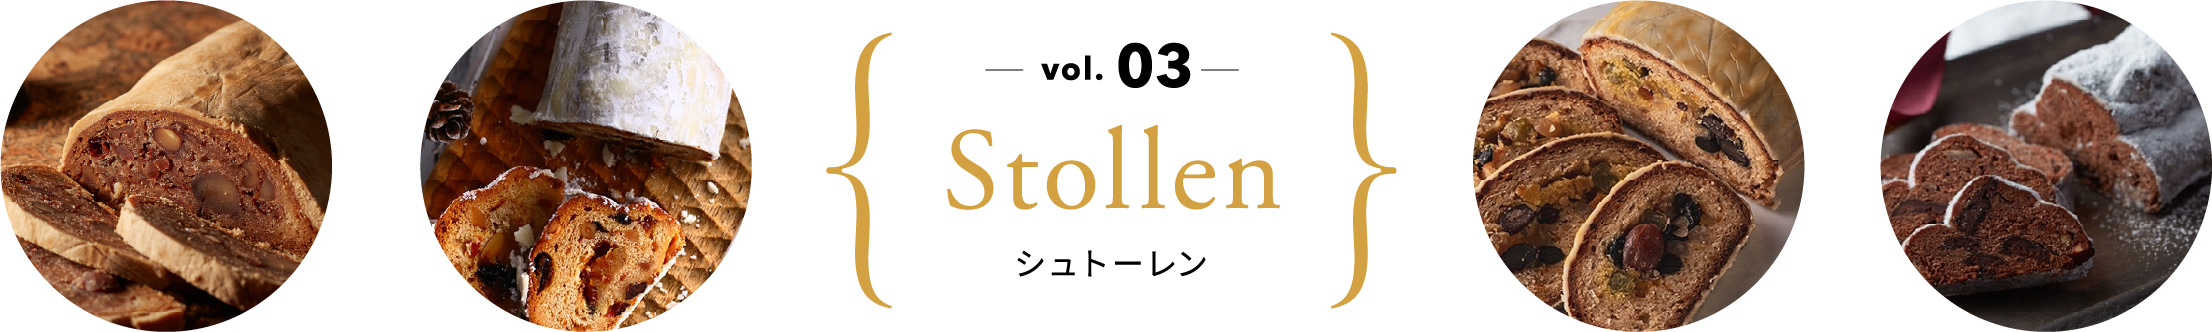 vol.03 シュトーレン